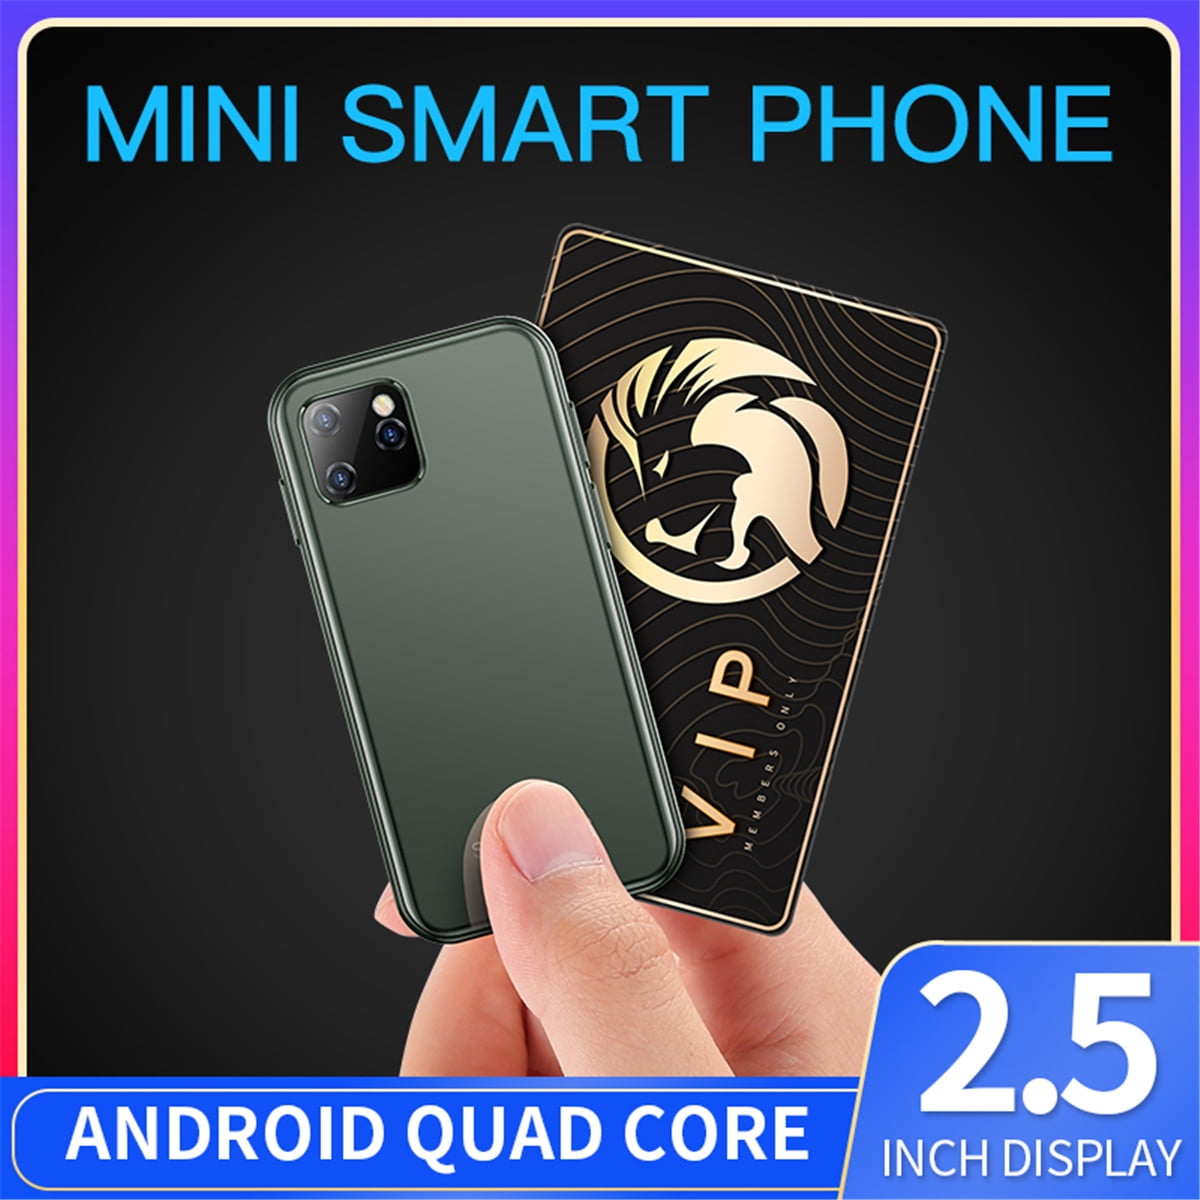 Super Mini Smartphone, SOYES XS11 Unlocked Phone 3G WCDMA Android Mobile  2.5'' Touch Screen 1GB RAM 8GB ROM Dual SIM WiFi Bluetooth Hotspot Ultra  Thin